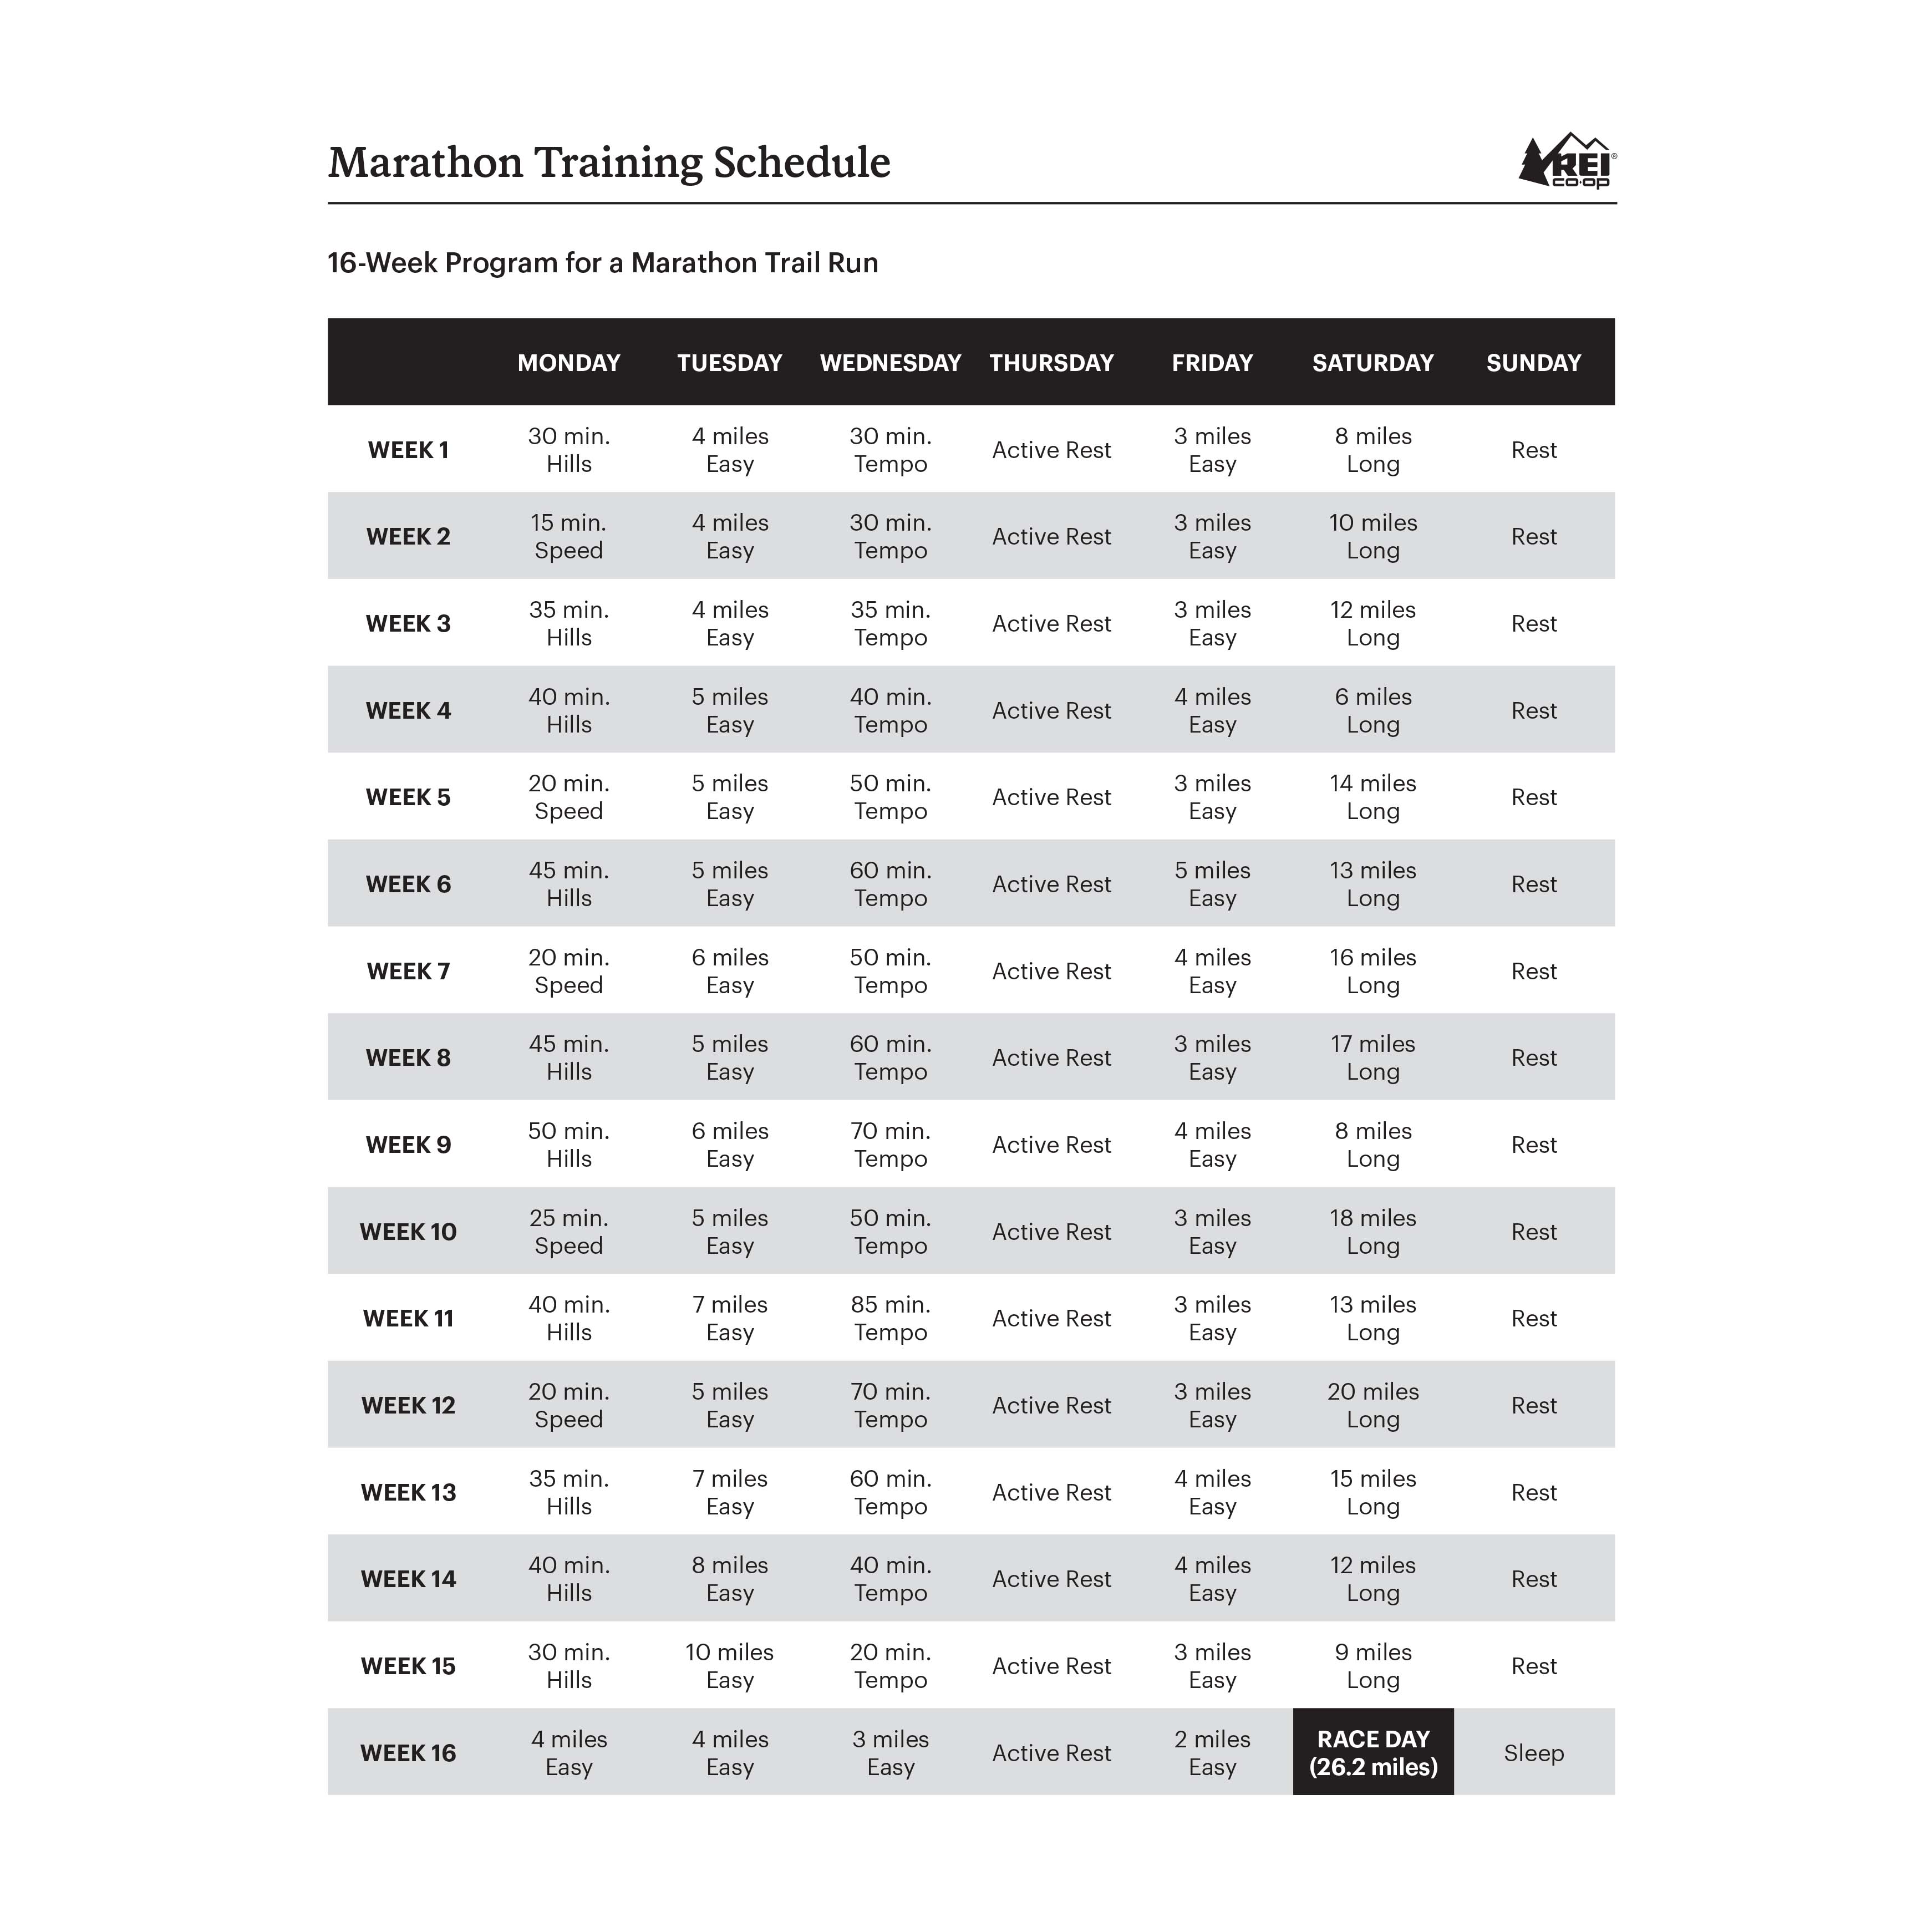 training plan table for marathon trail running race